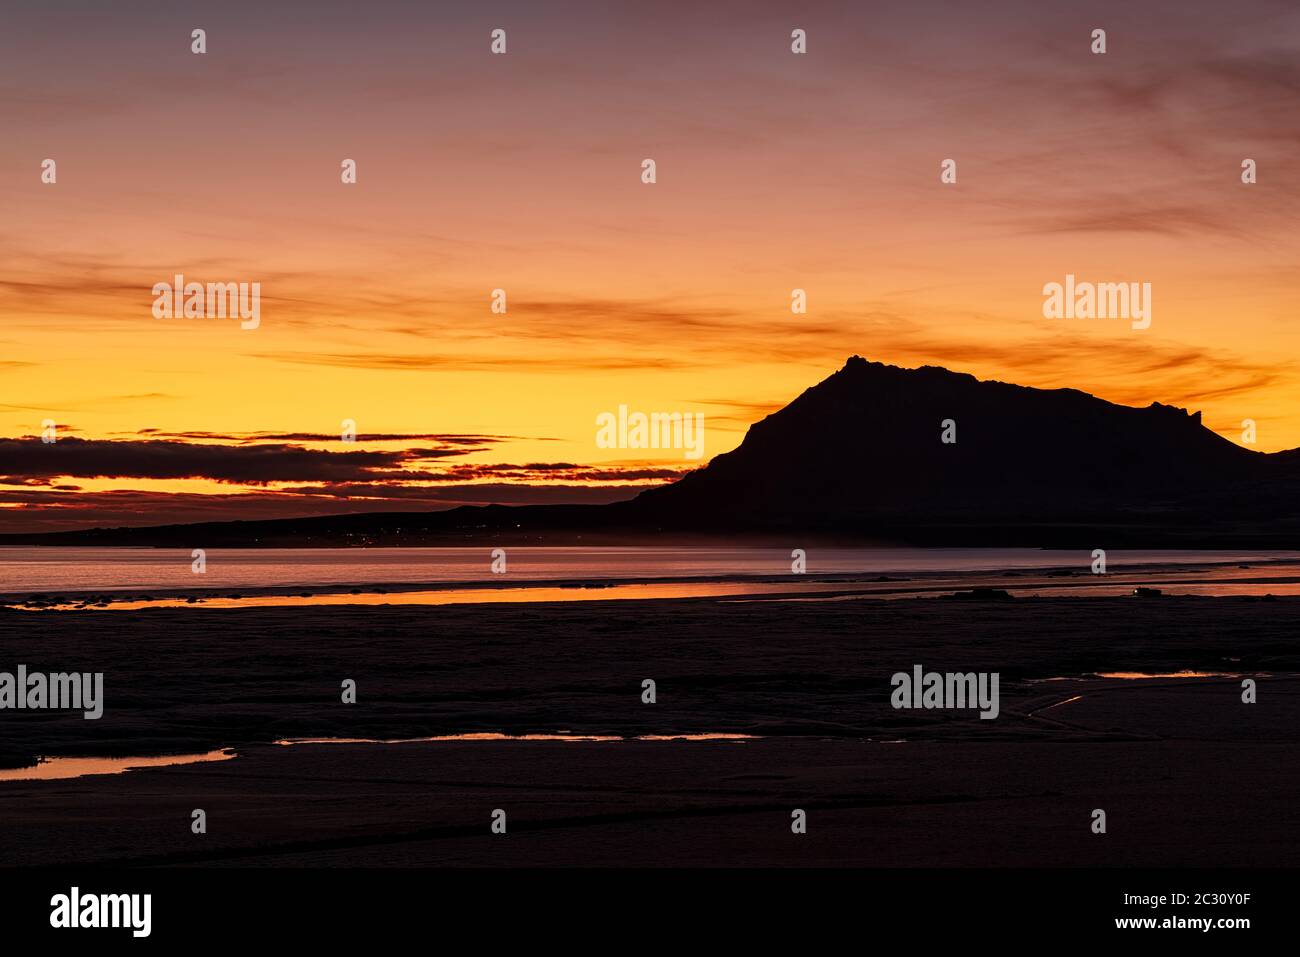 Mountains at sunset, Iceland Stock Photo